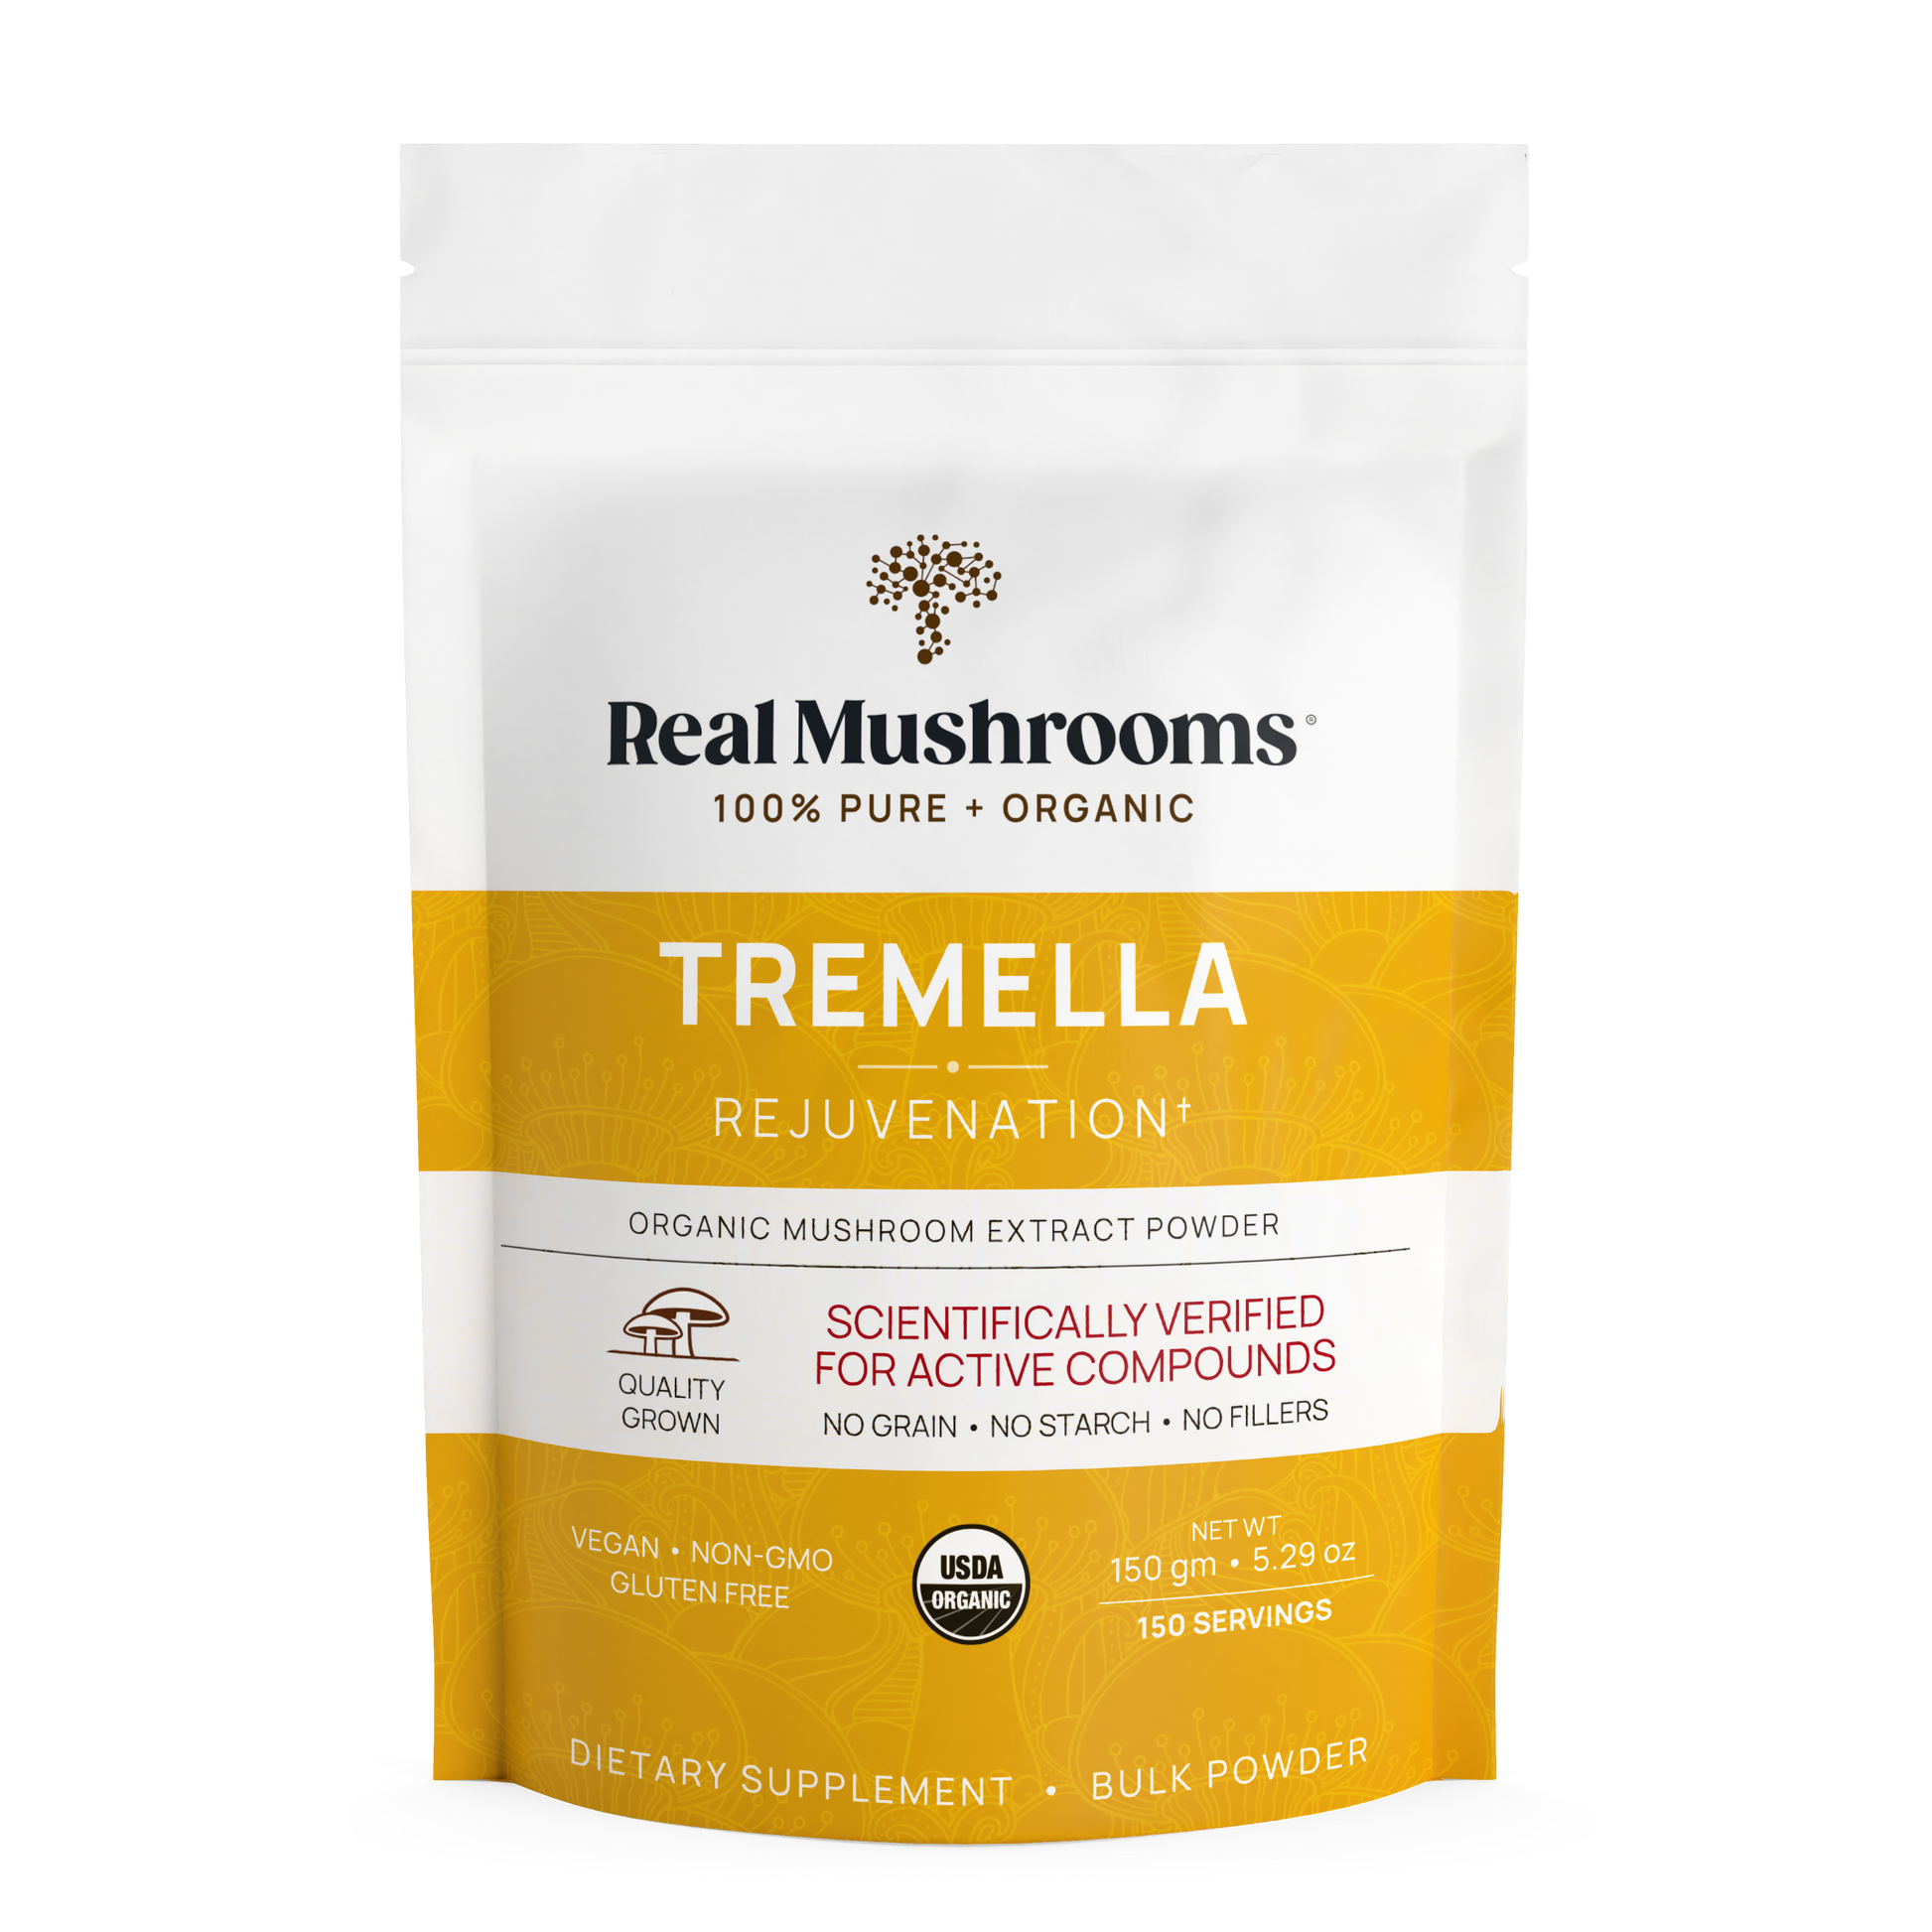 Real Mushrooms Organic Tremella Extract Powder relaxation.